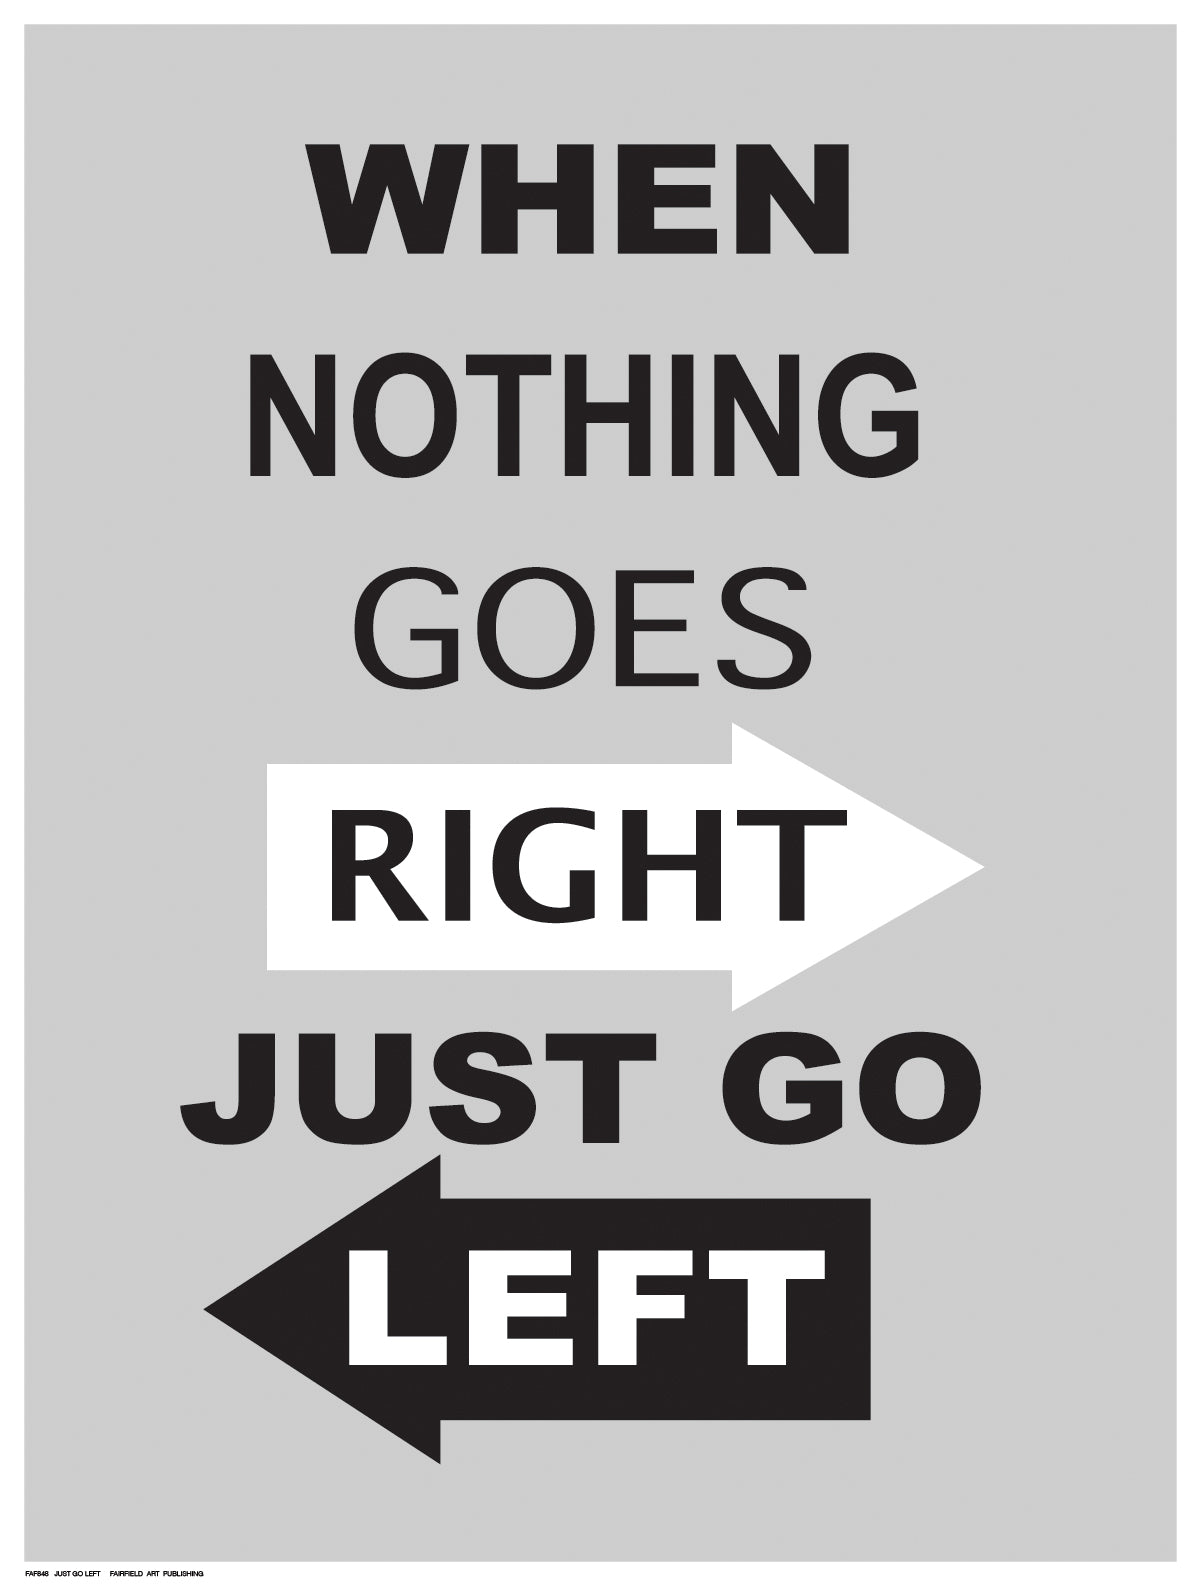 Just Go Left by Anon - FairField Art Publishing